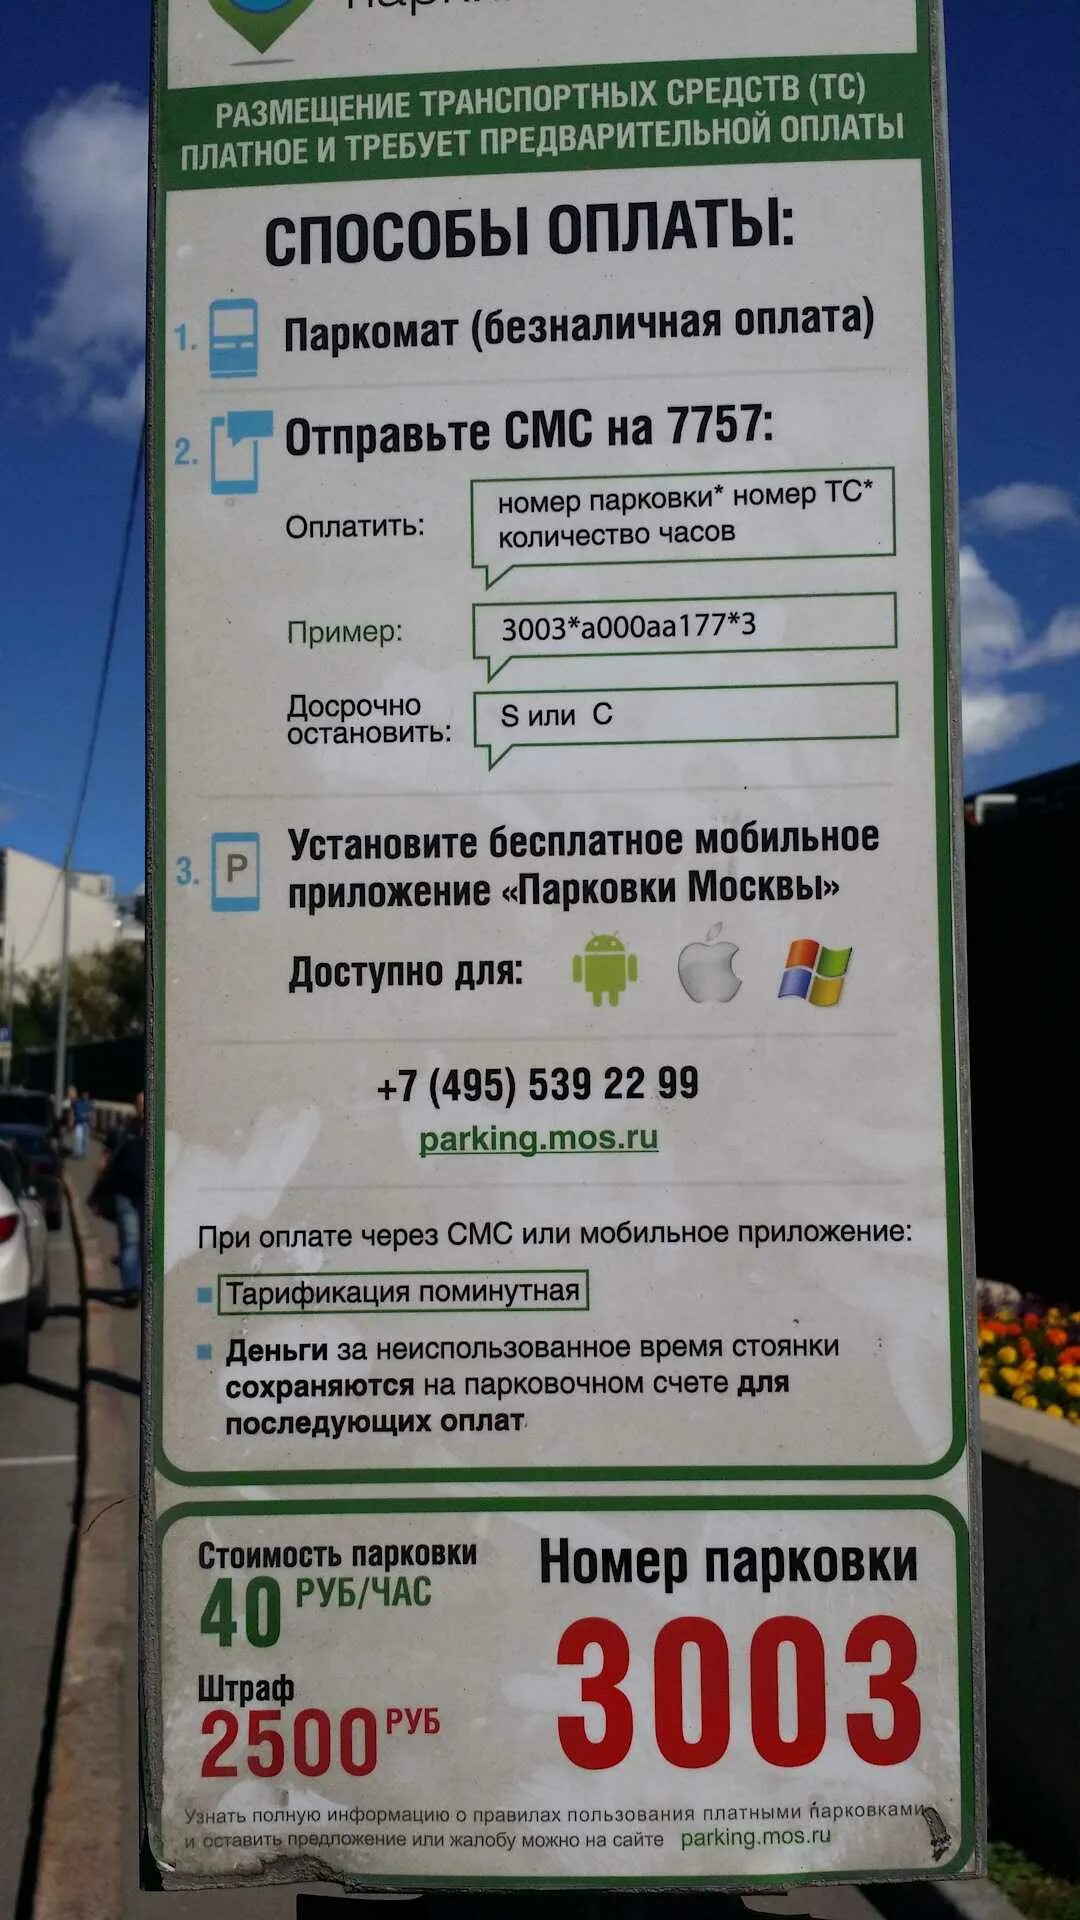 Оплата парковки. Оплата парковки в Москве. Оплатить парковку в Москве. Оплата парковки через смс. Забыл оплатить парковку что делать